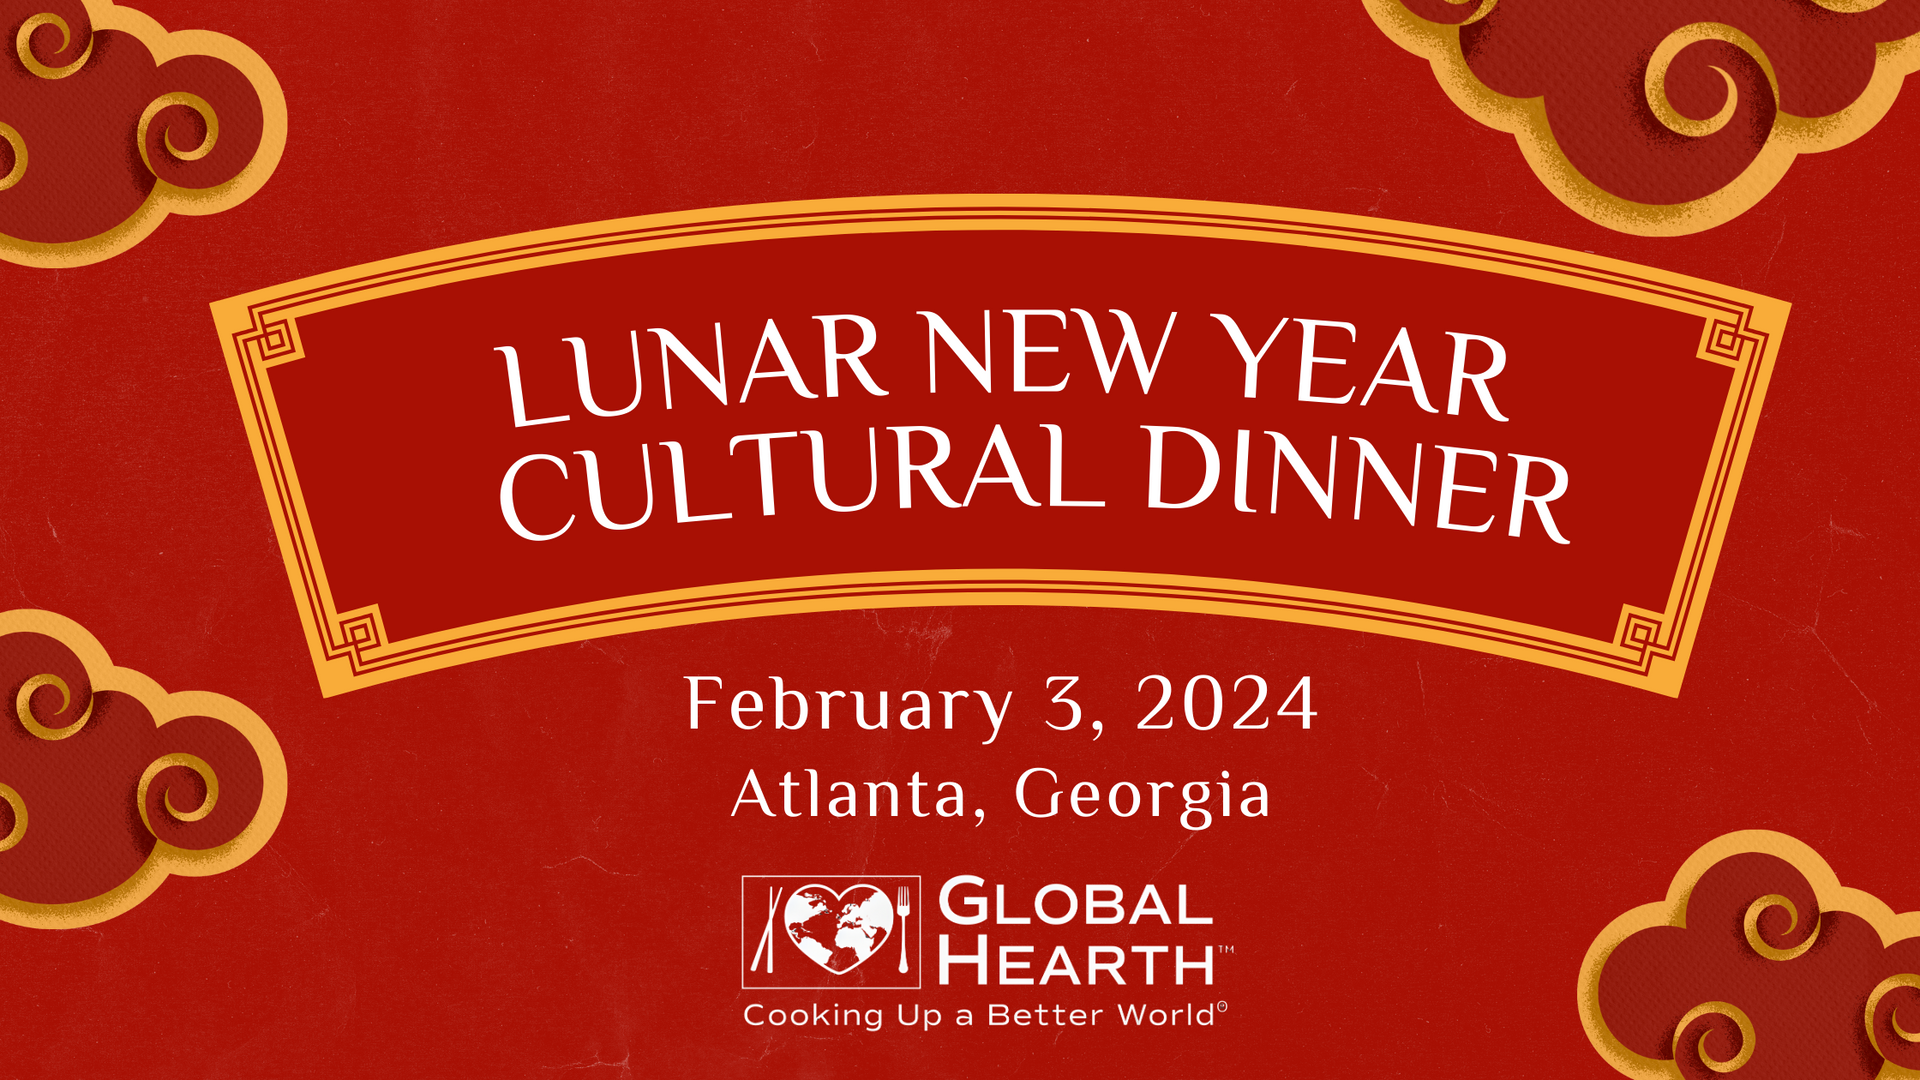 Saturday, February 3: 10th Annual Lunar New Year Cultural Dinner